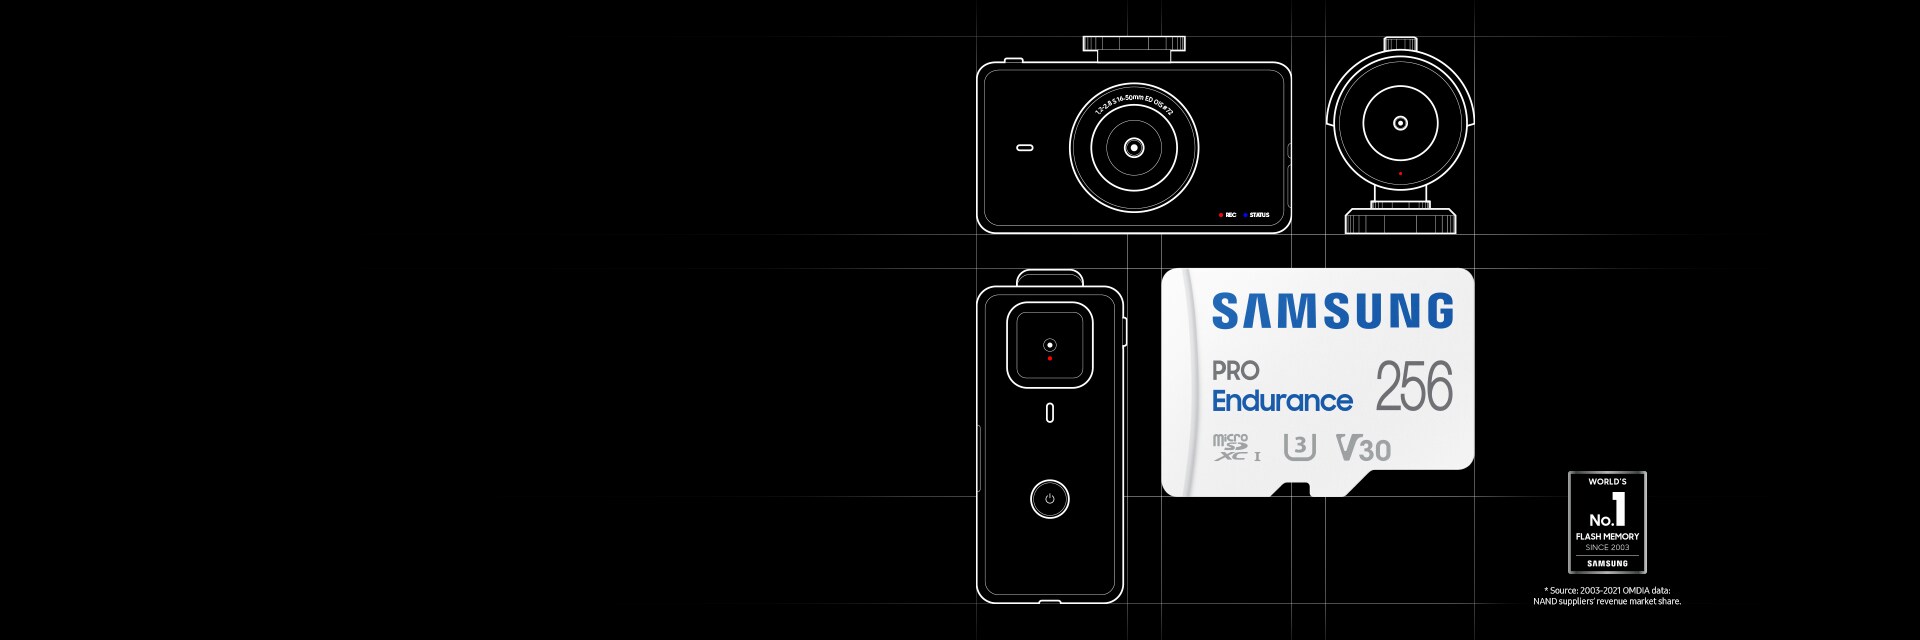 Samsung Announces Improved Speeds for PRO Plus Memory Card Line-Up -  Samsung US Newsroom